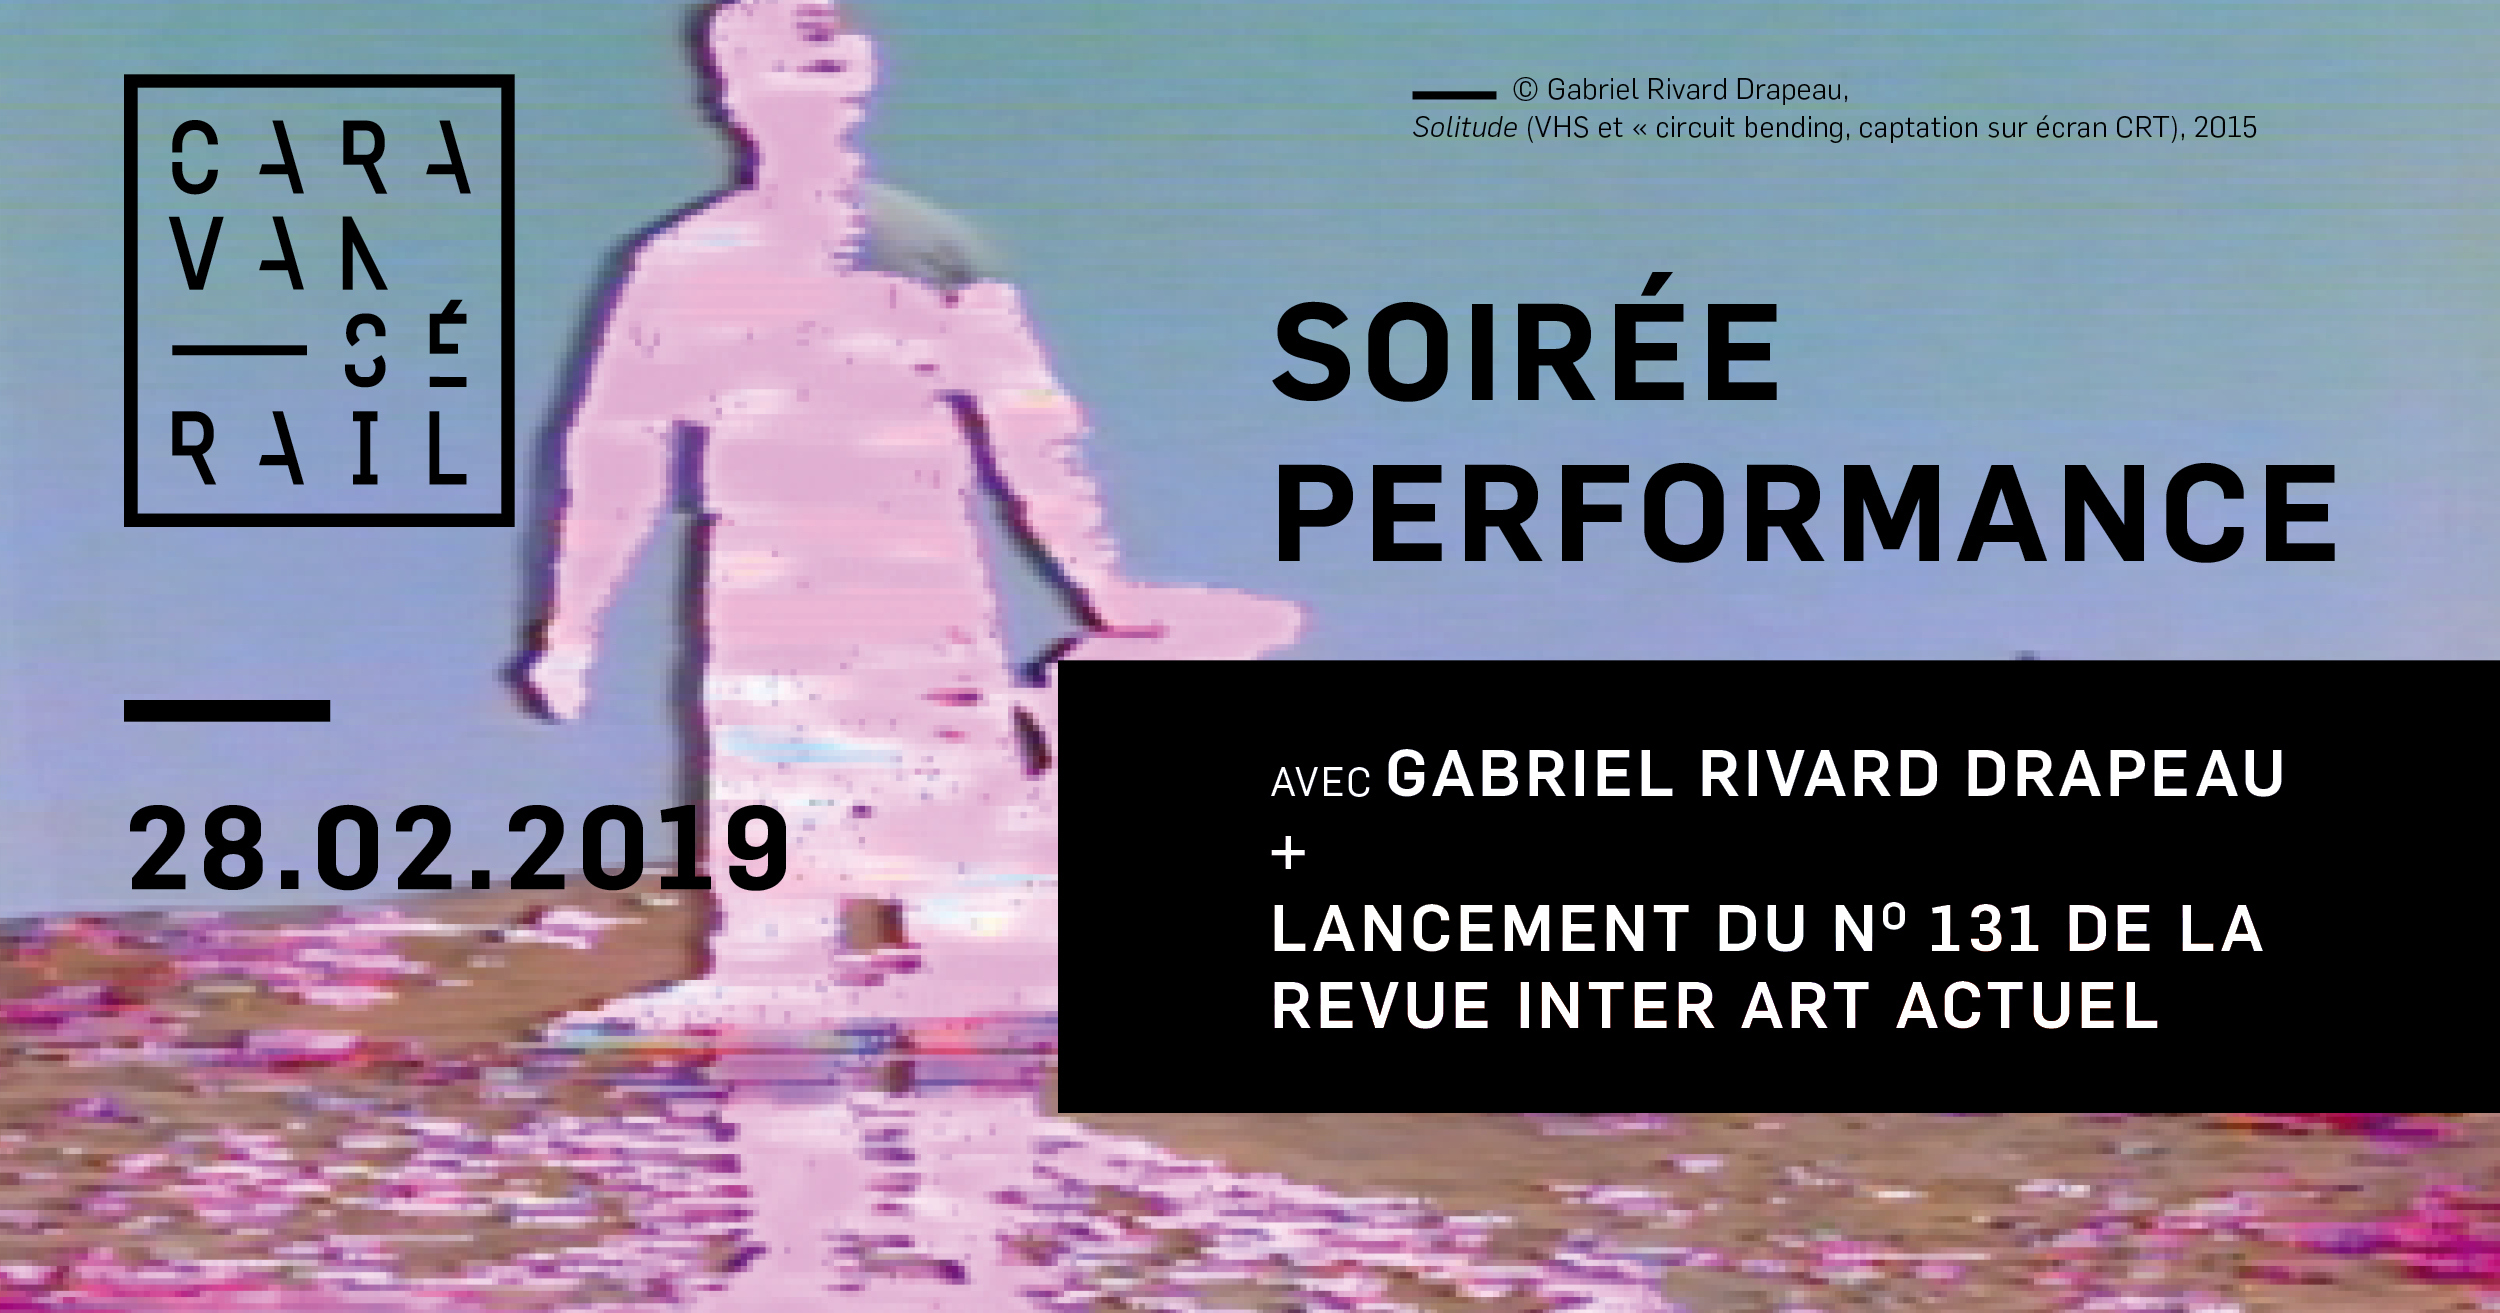 FACEBOOK GabrielRDrapeau Caravansérail 2019 evenement PERF